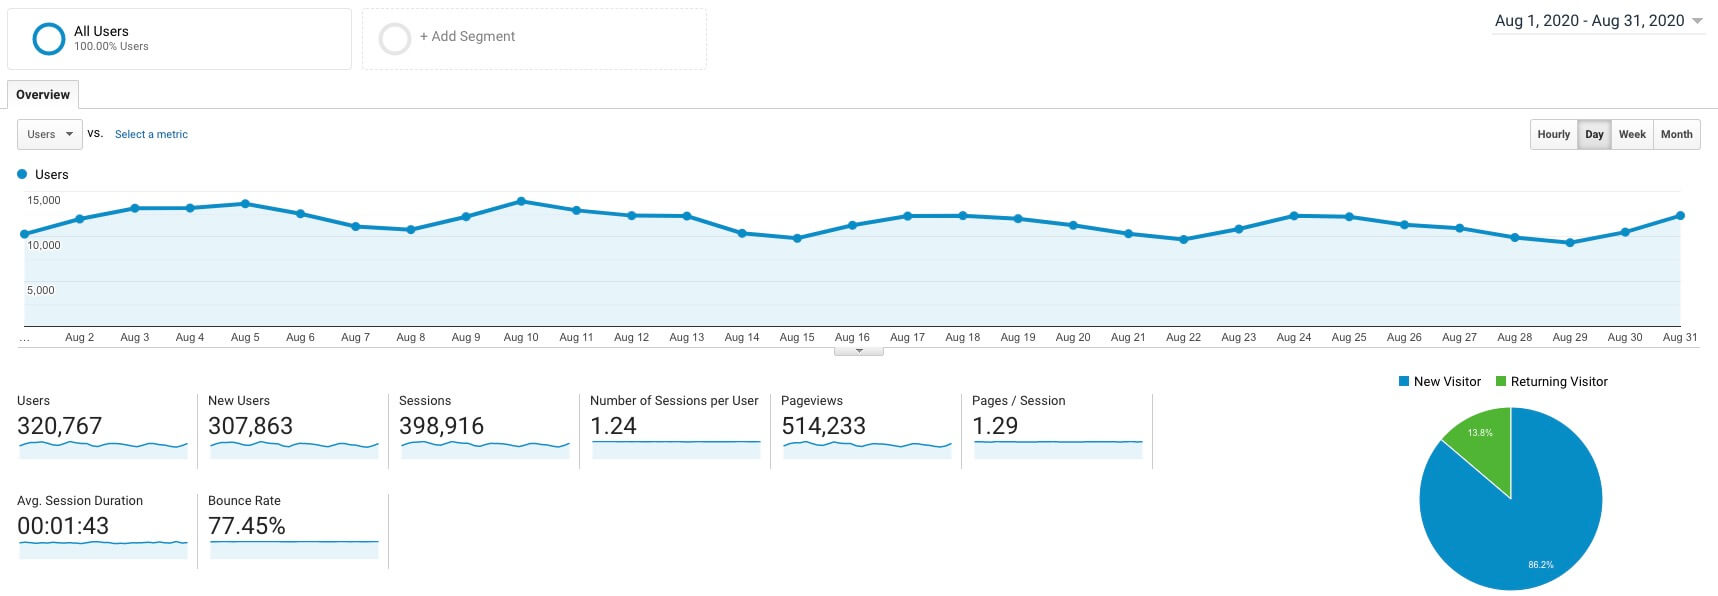 Google Analytics Screenshot (August 2020 Traffic) Blog Income Report ryrob